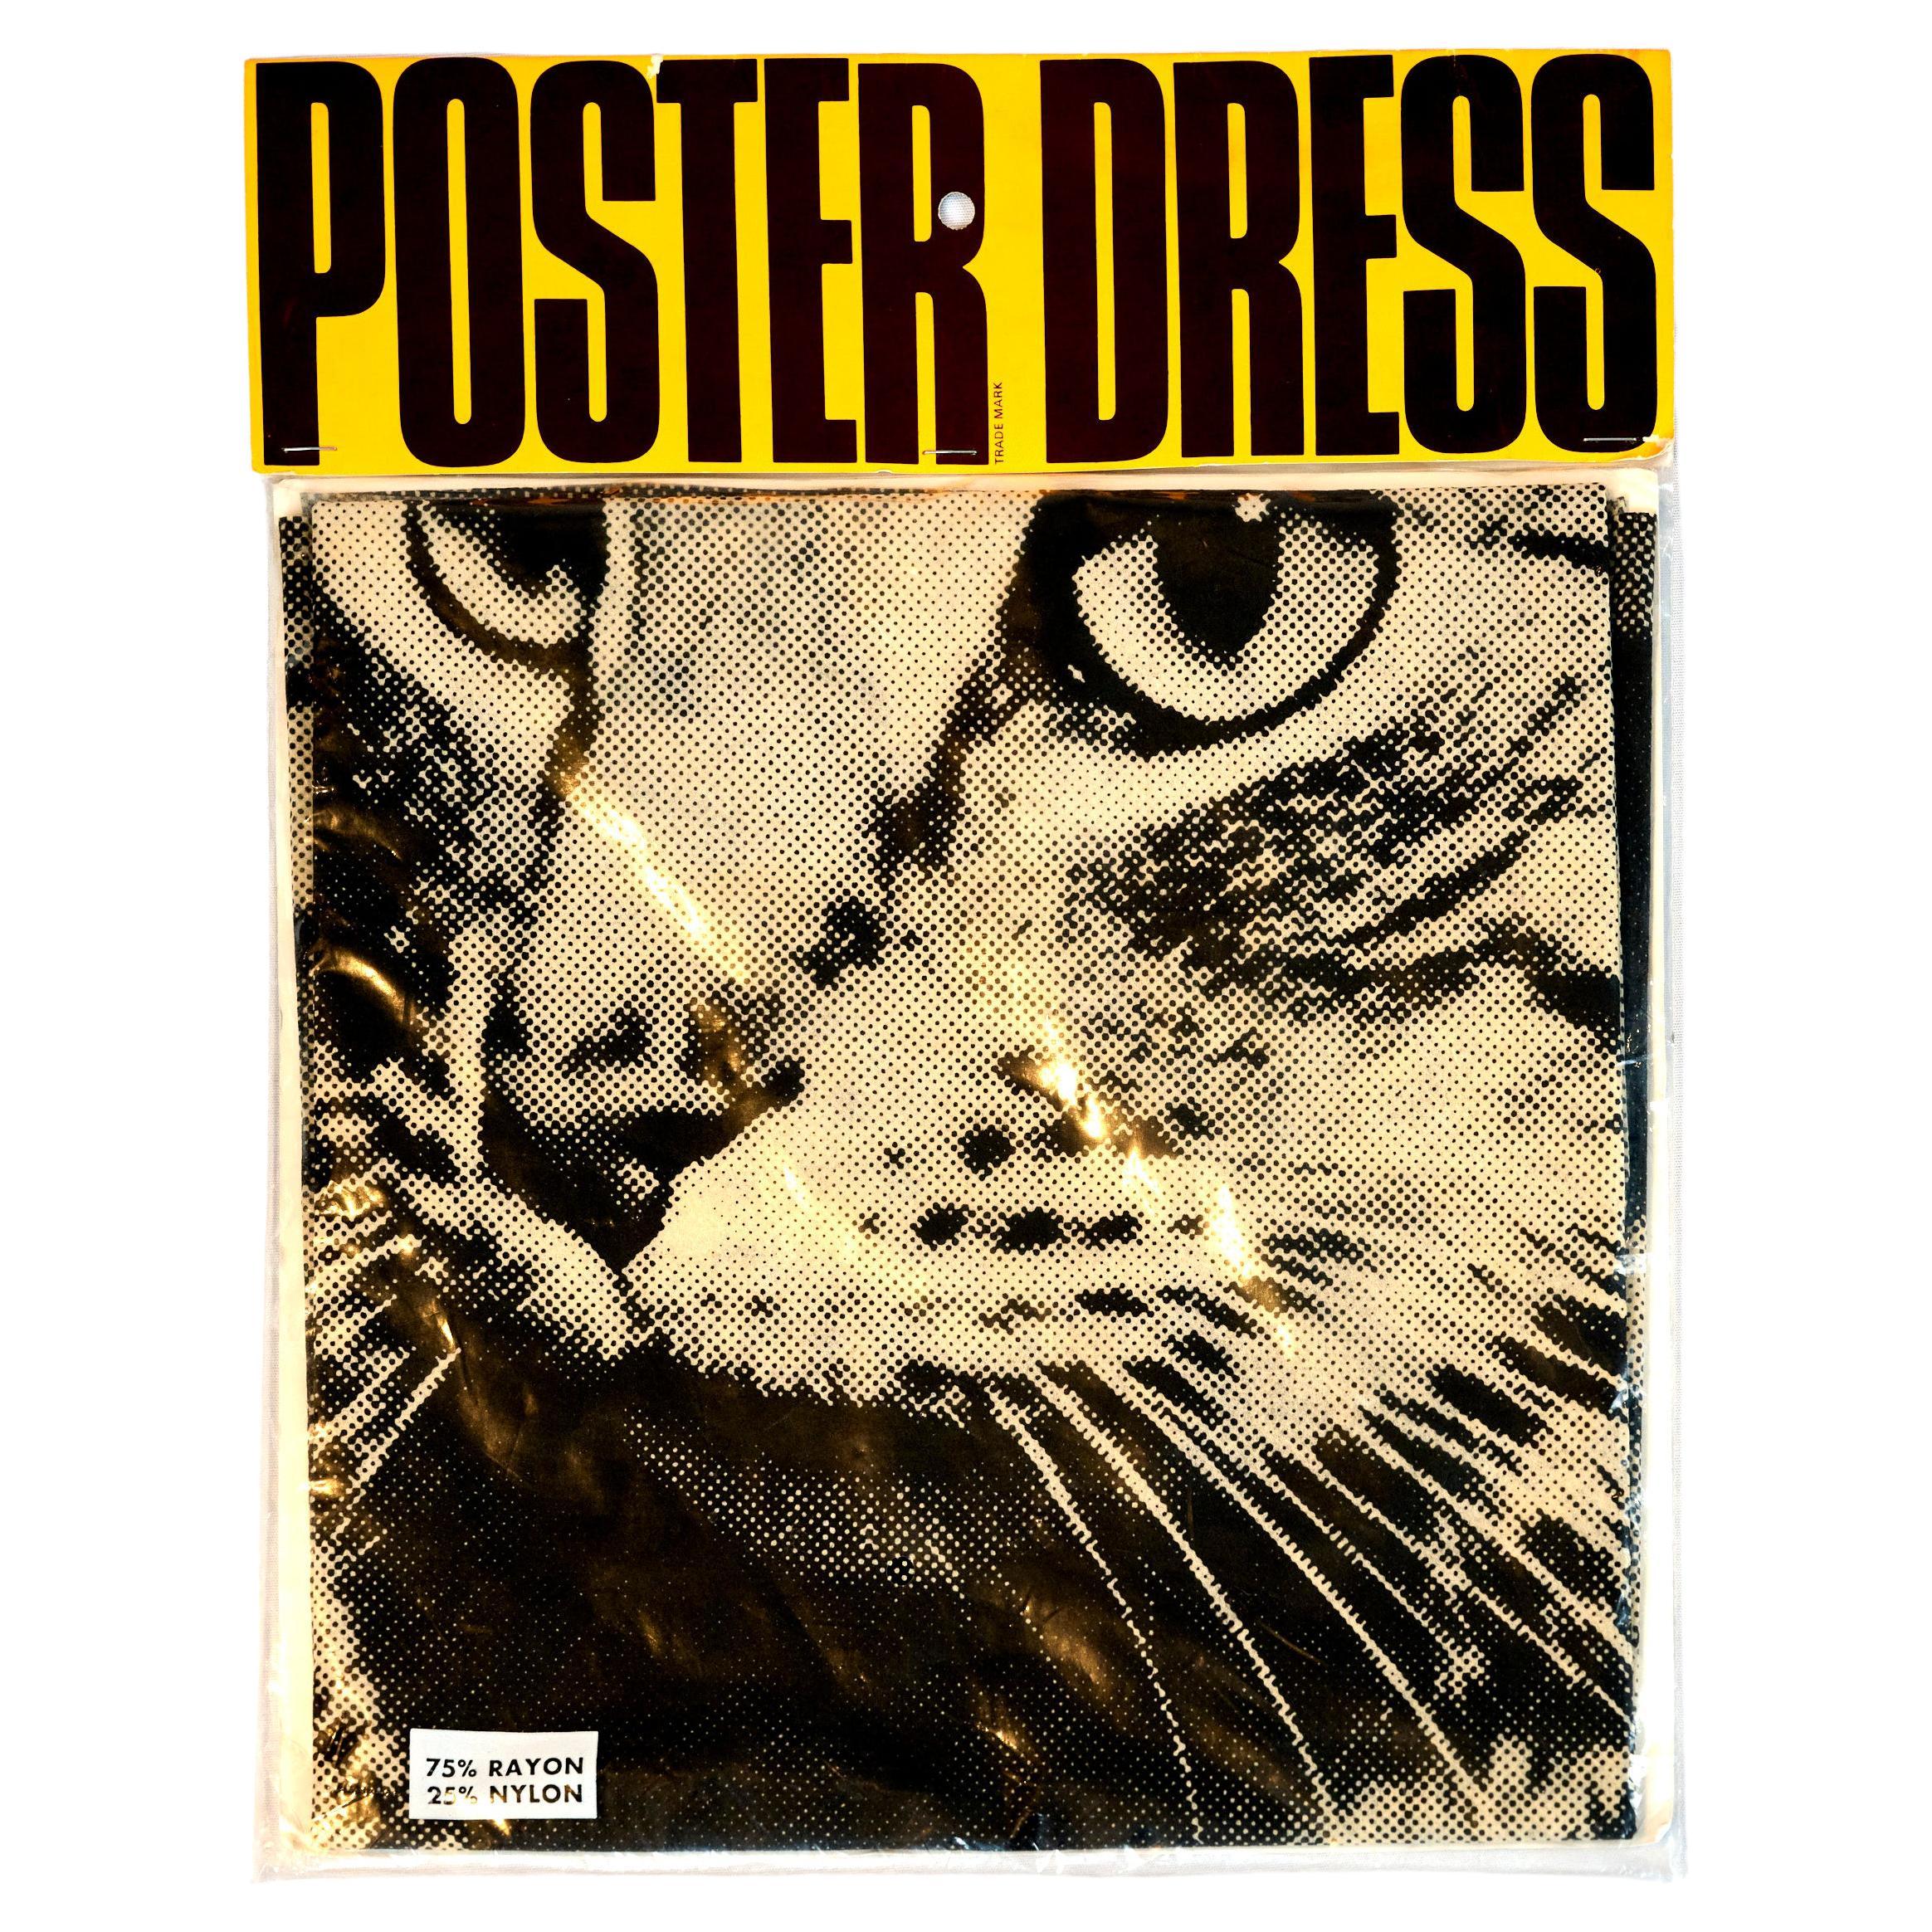 'Cat' by Harry Gordon, Poster Dresses Ltd, London, England, 1968